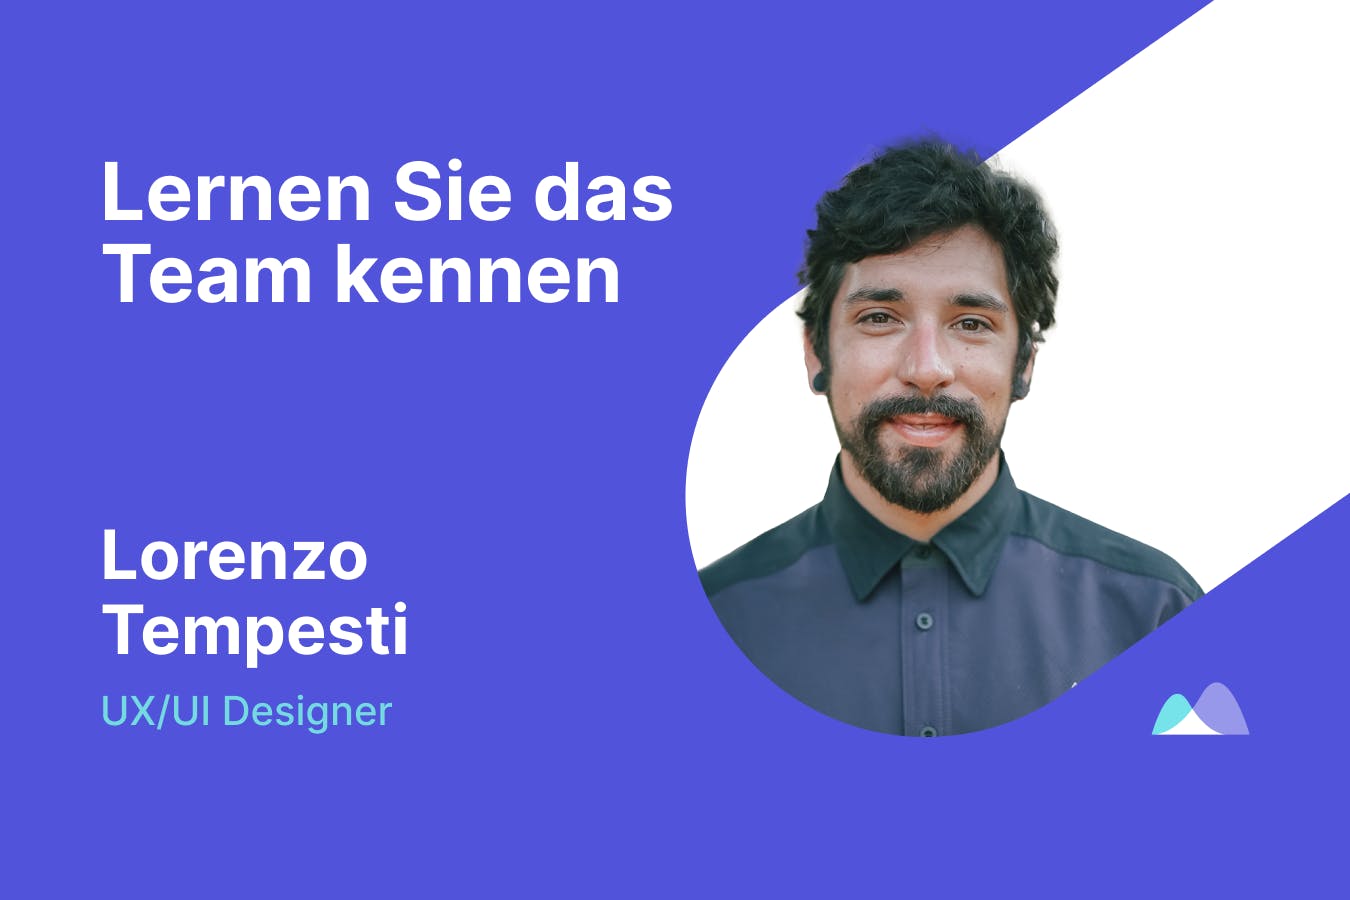 Lorenzo Tempesti, UI/UX Designer bei Smartpricing